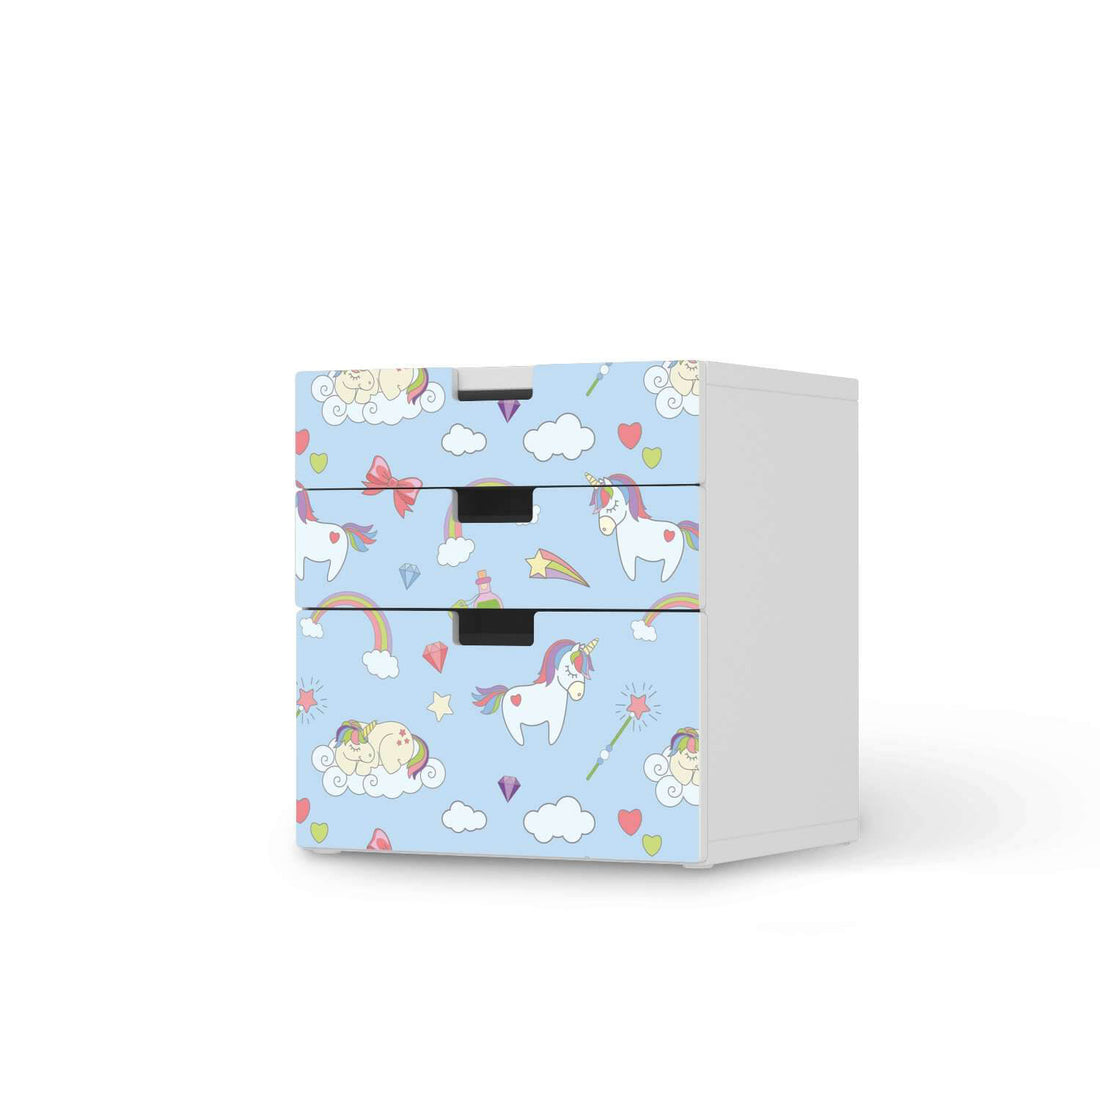 Folie für Möbel Rainbow Unicorn - IKEA Stuva Kommode - 3 Schubladen (Kombination 1)  - weiss